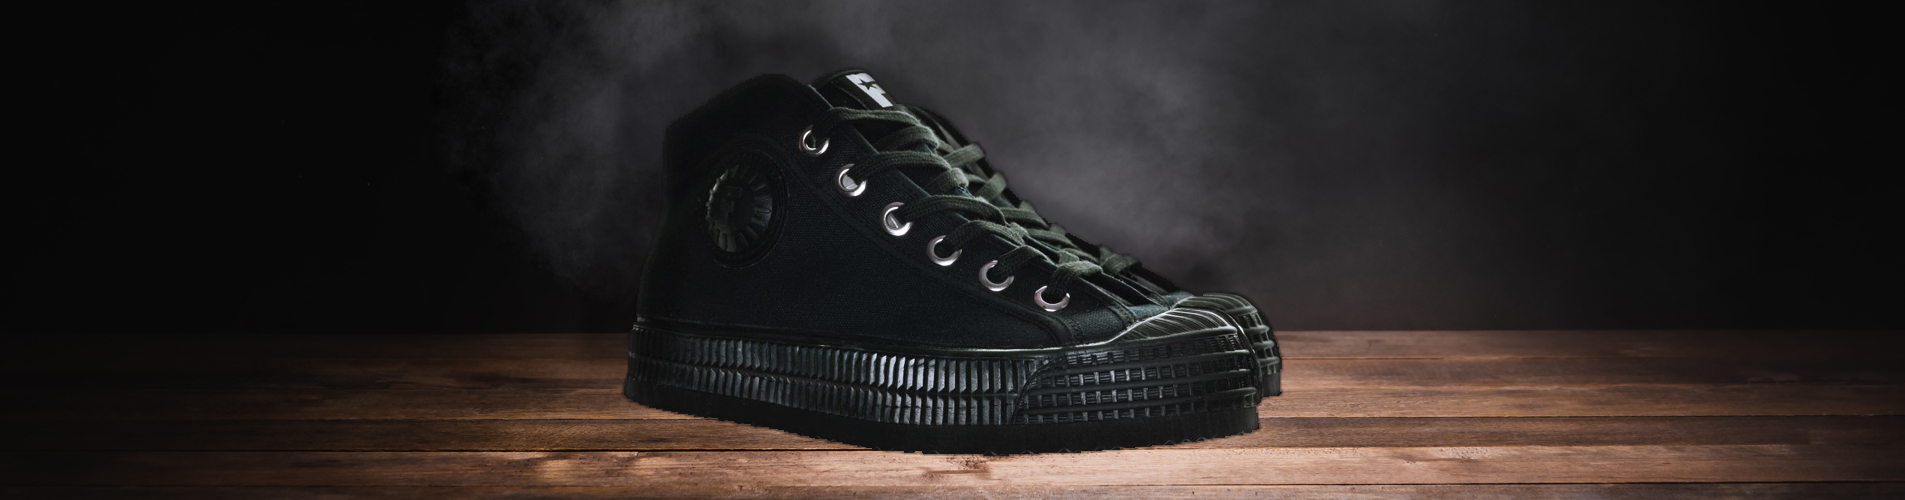 Vegan sneakers, completly natural sneaker in full black color